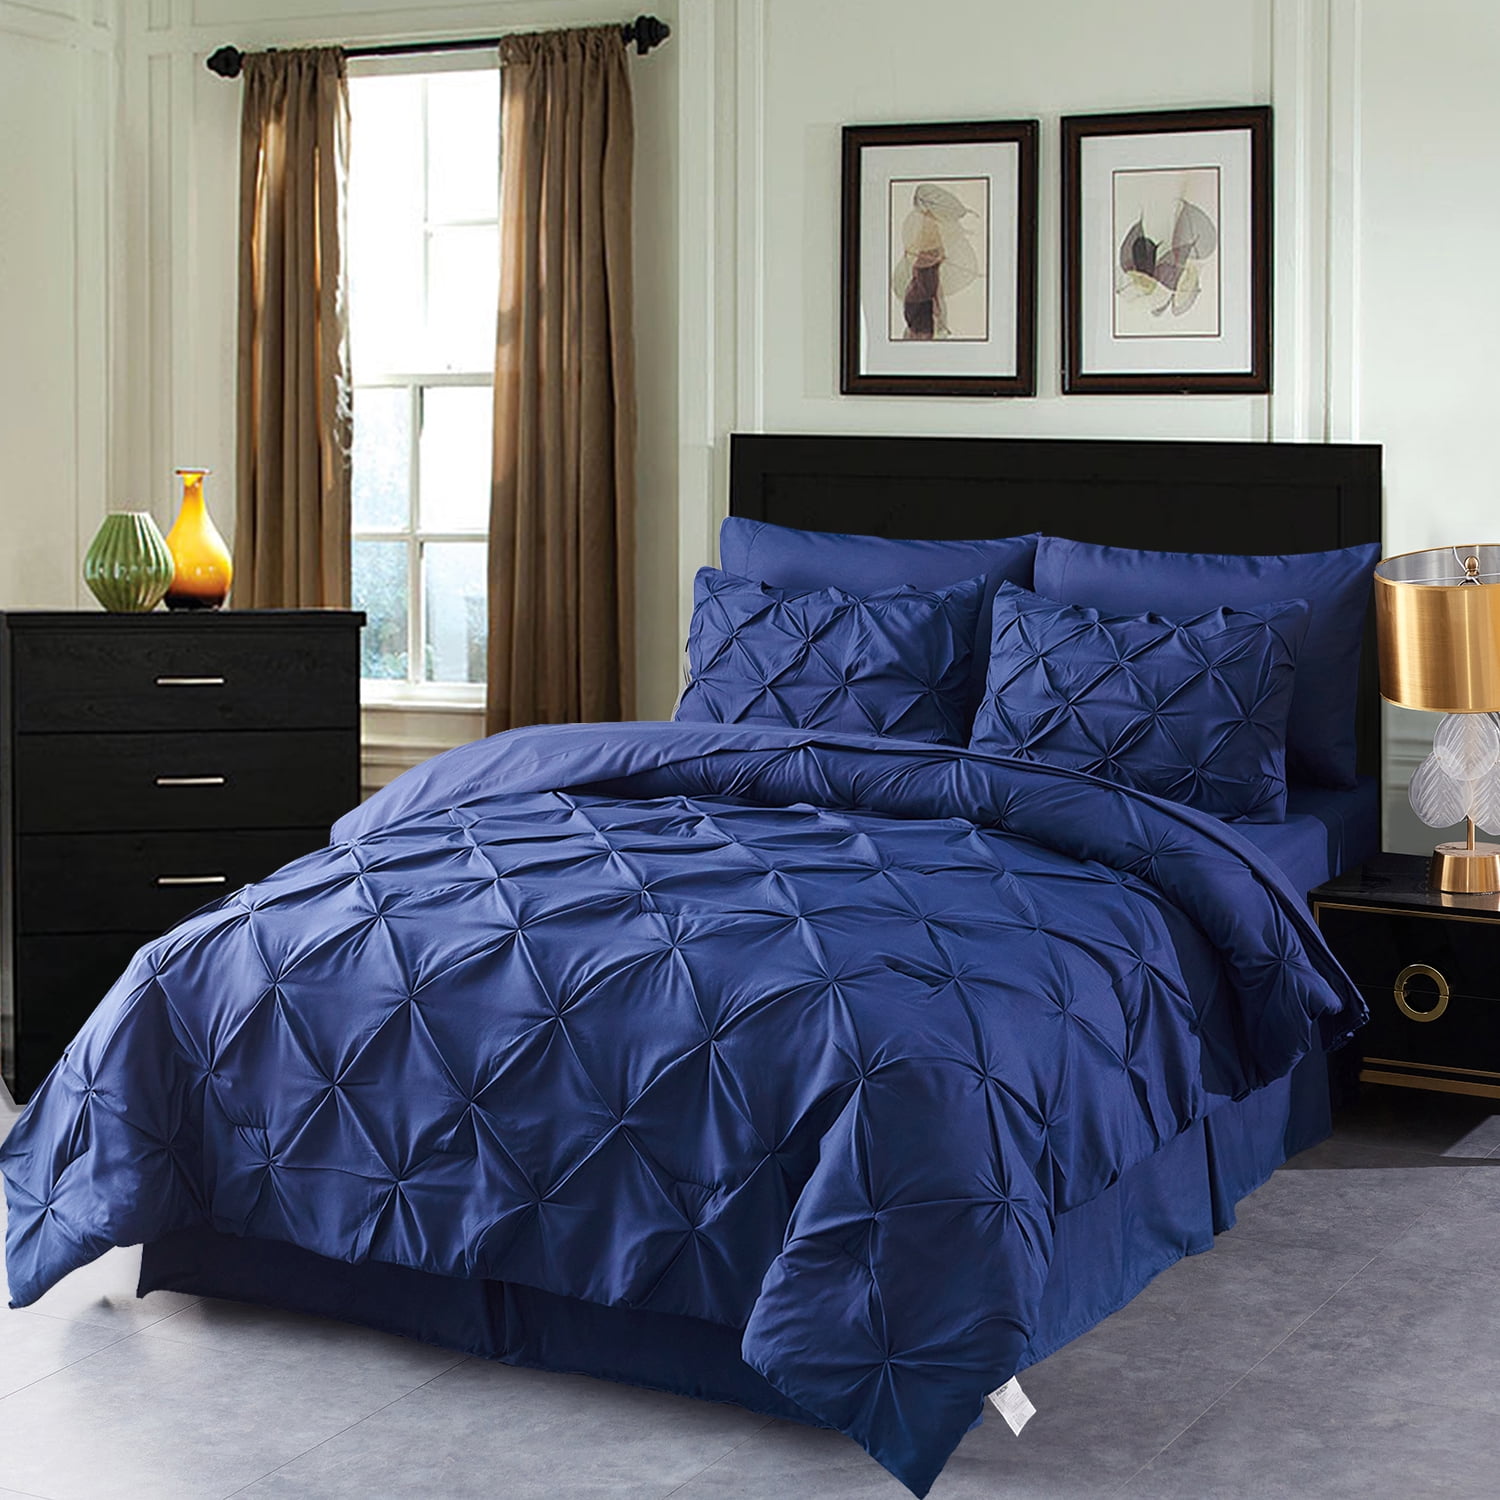 Mainstays Monique Paisley Complete Bedding Set King Size for sale online 